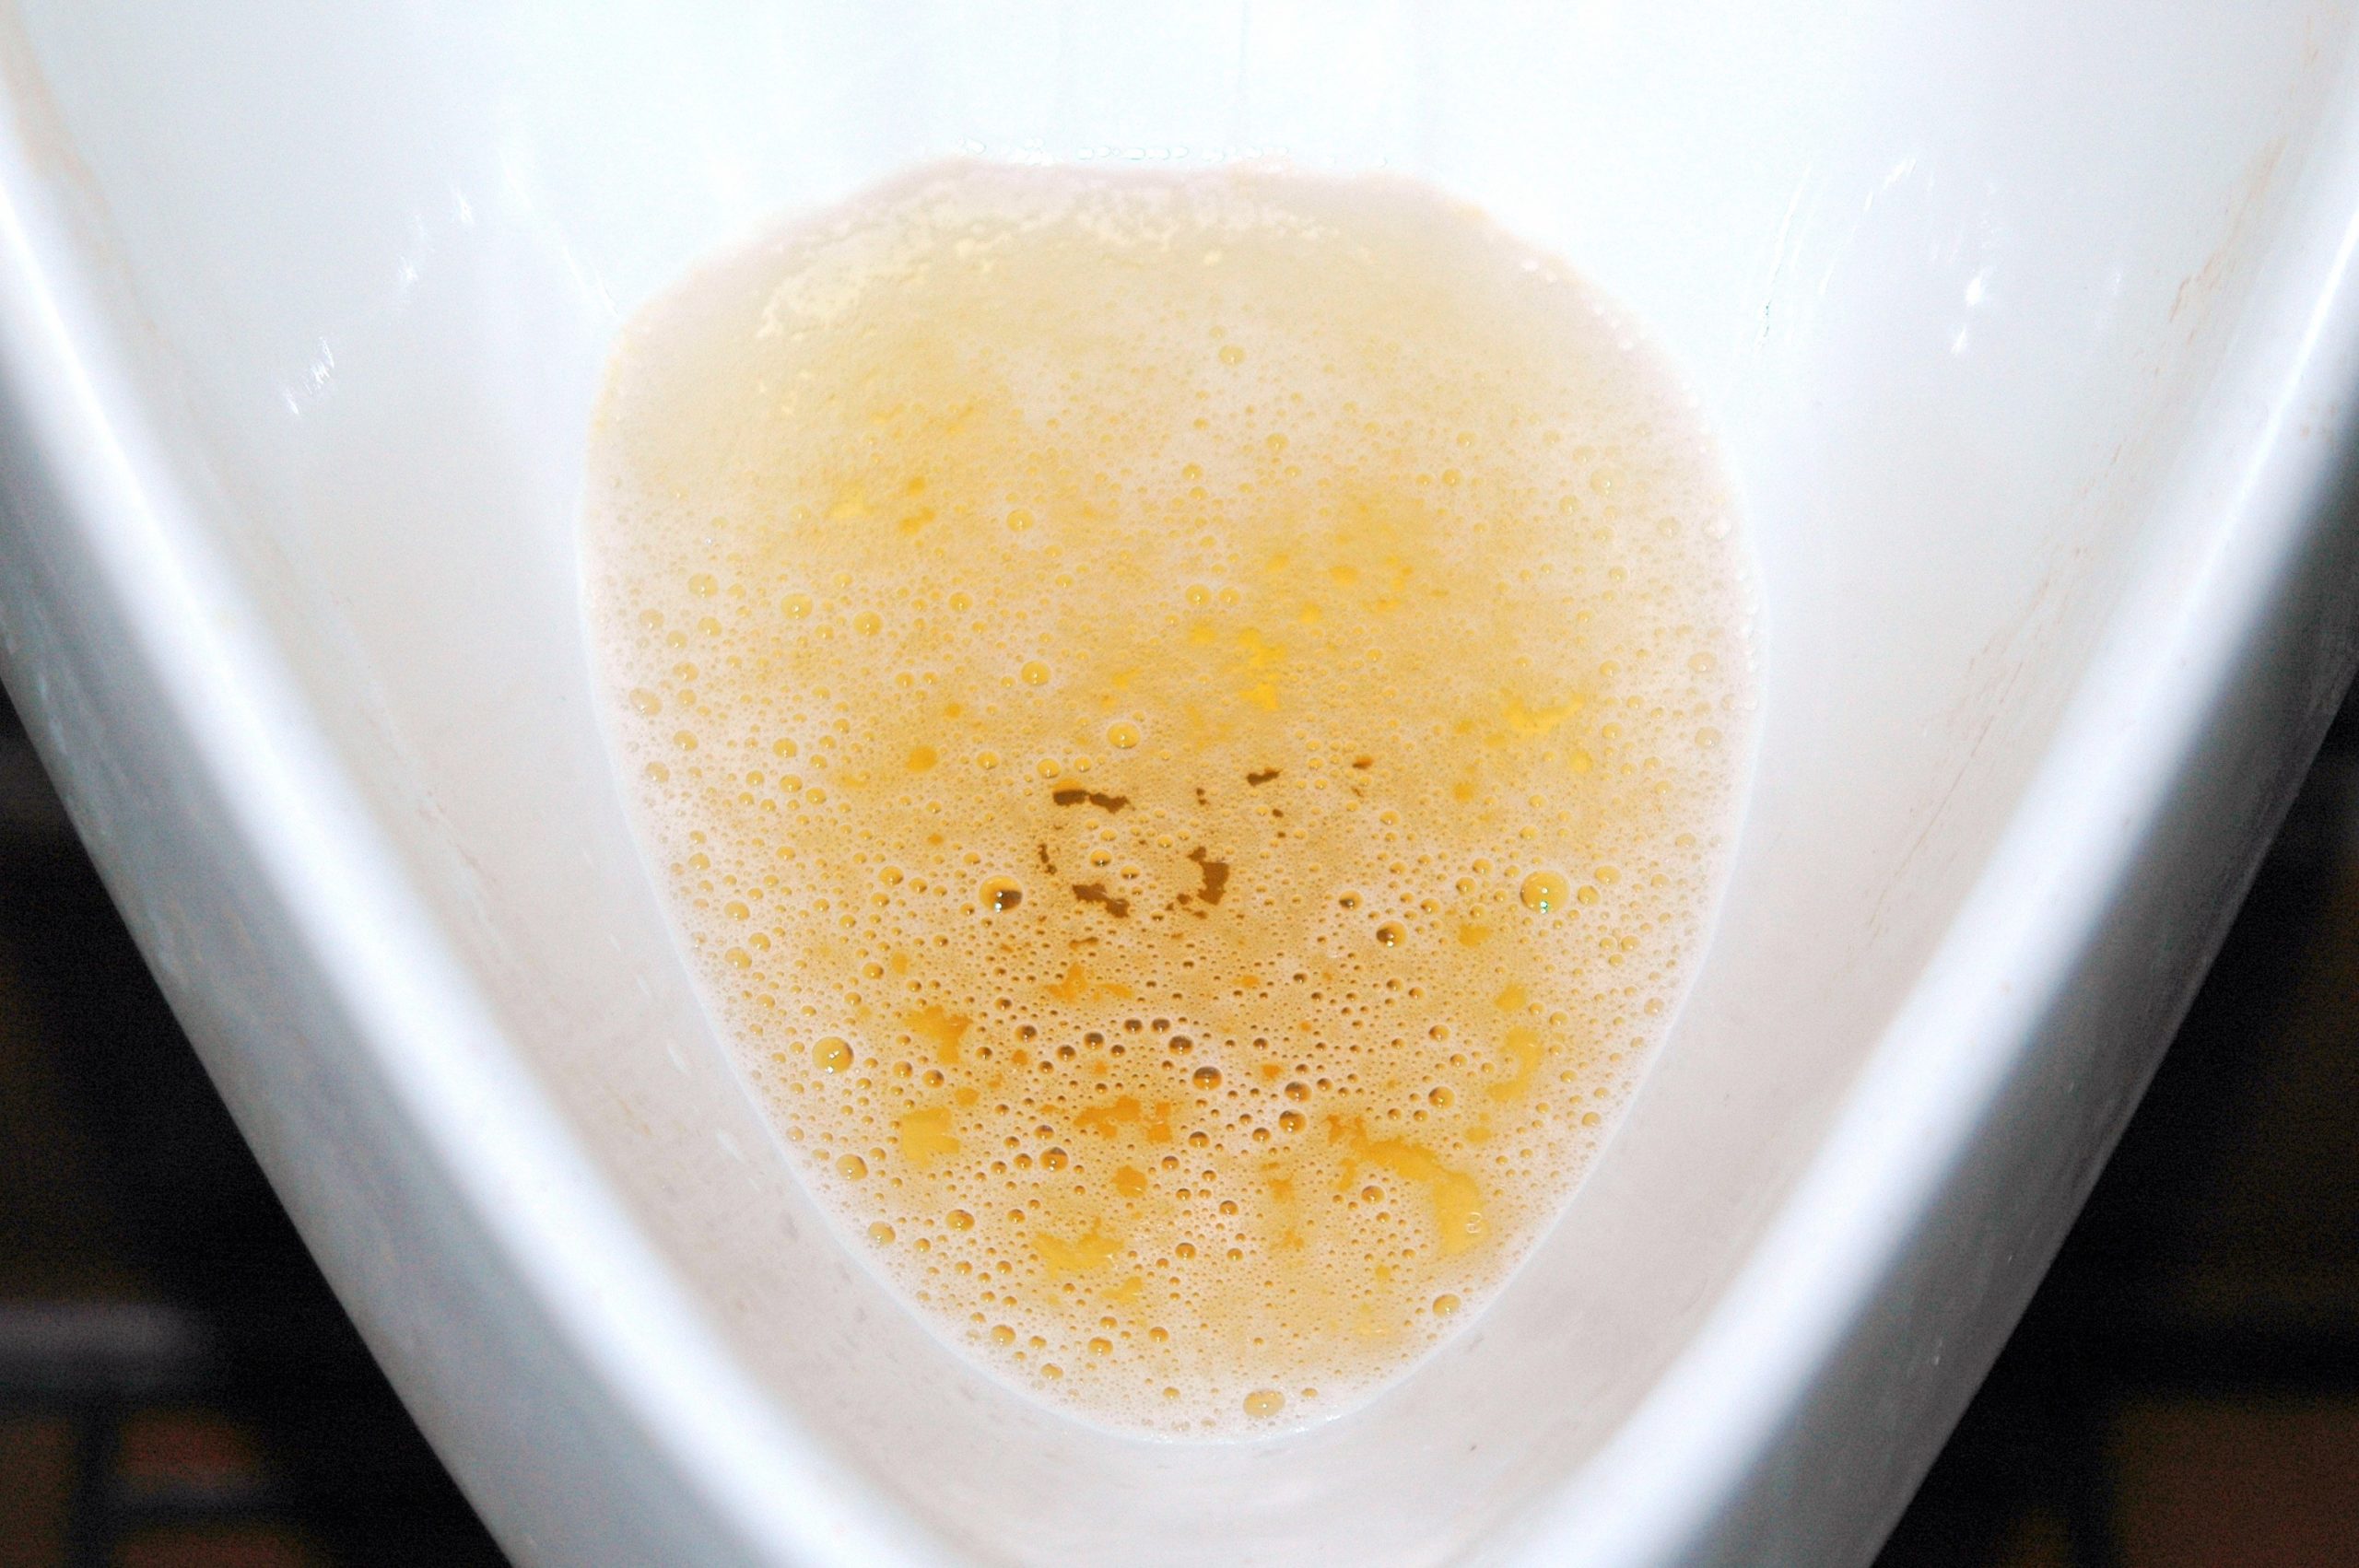 yellow urine in toilet bowl